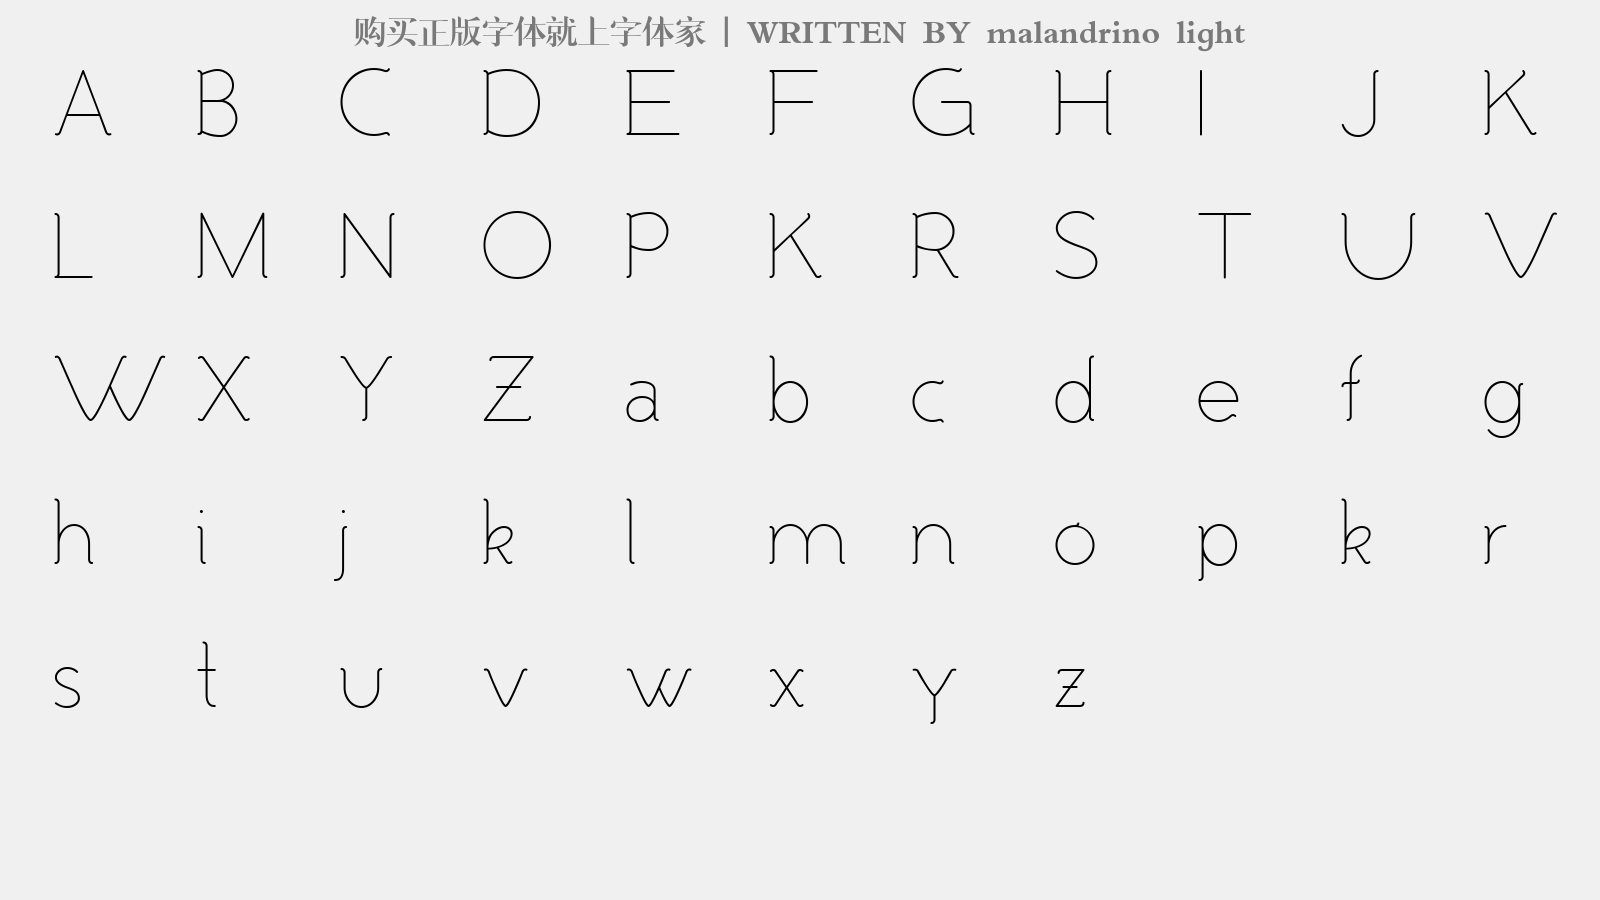 malandrino light - 大写字母/小写字母/数字